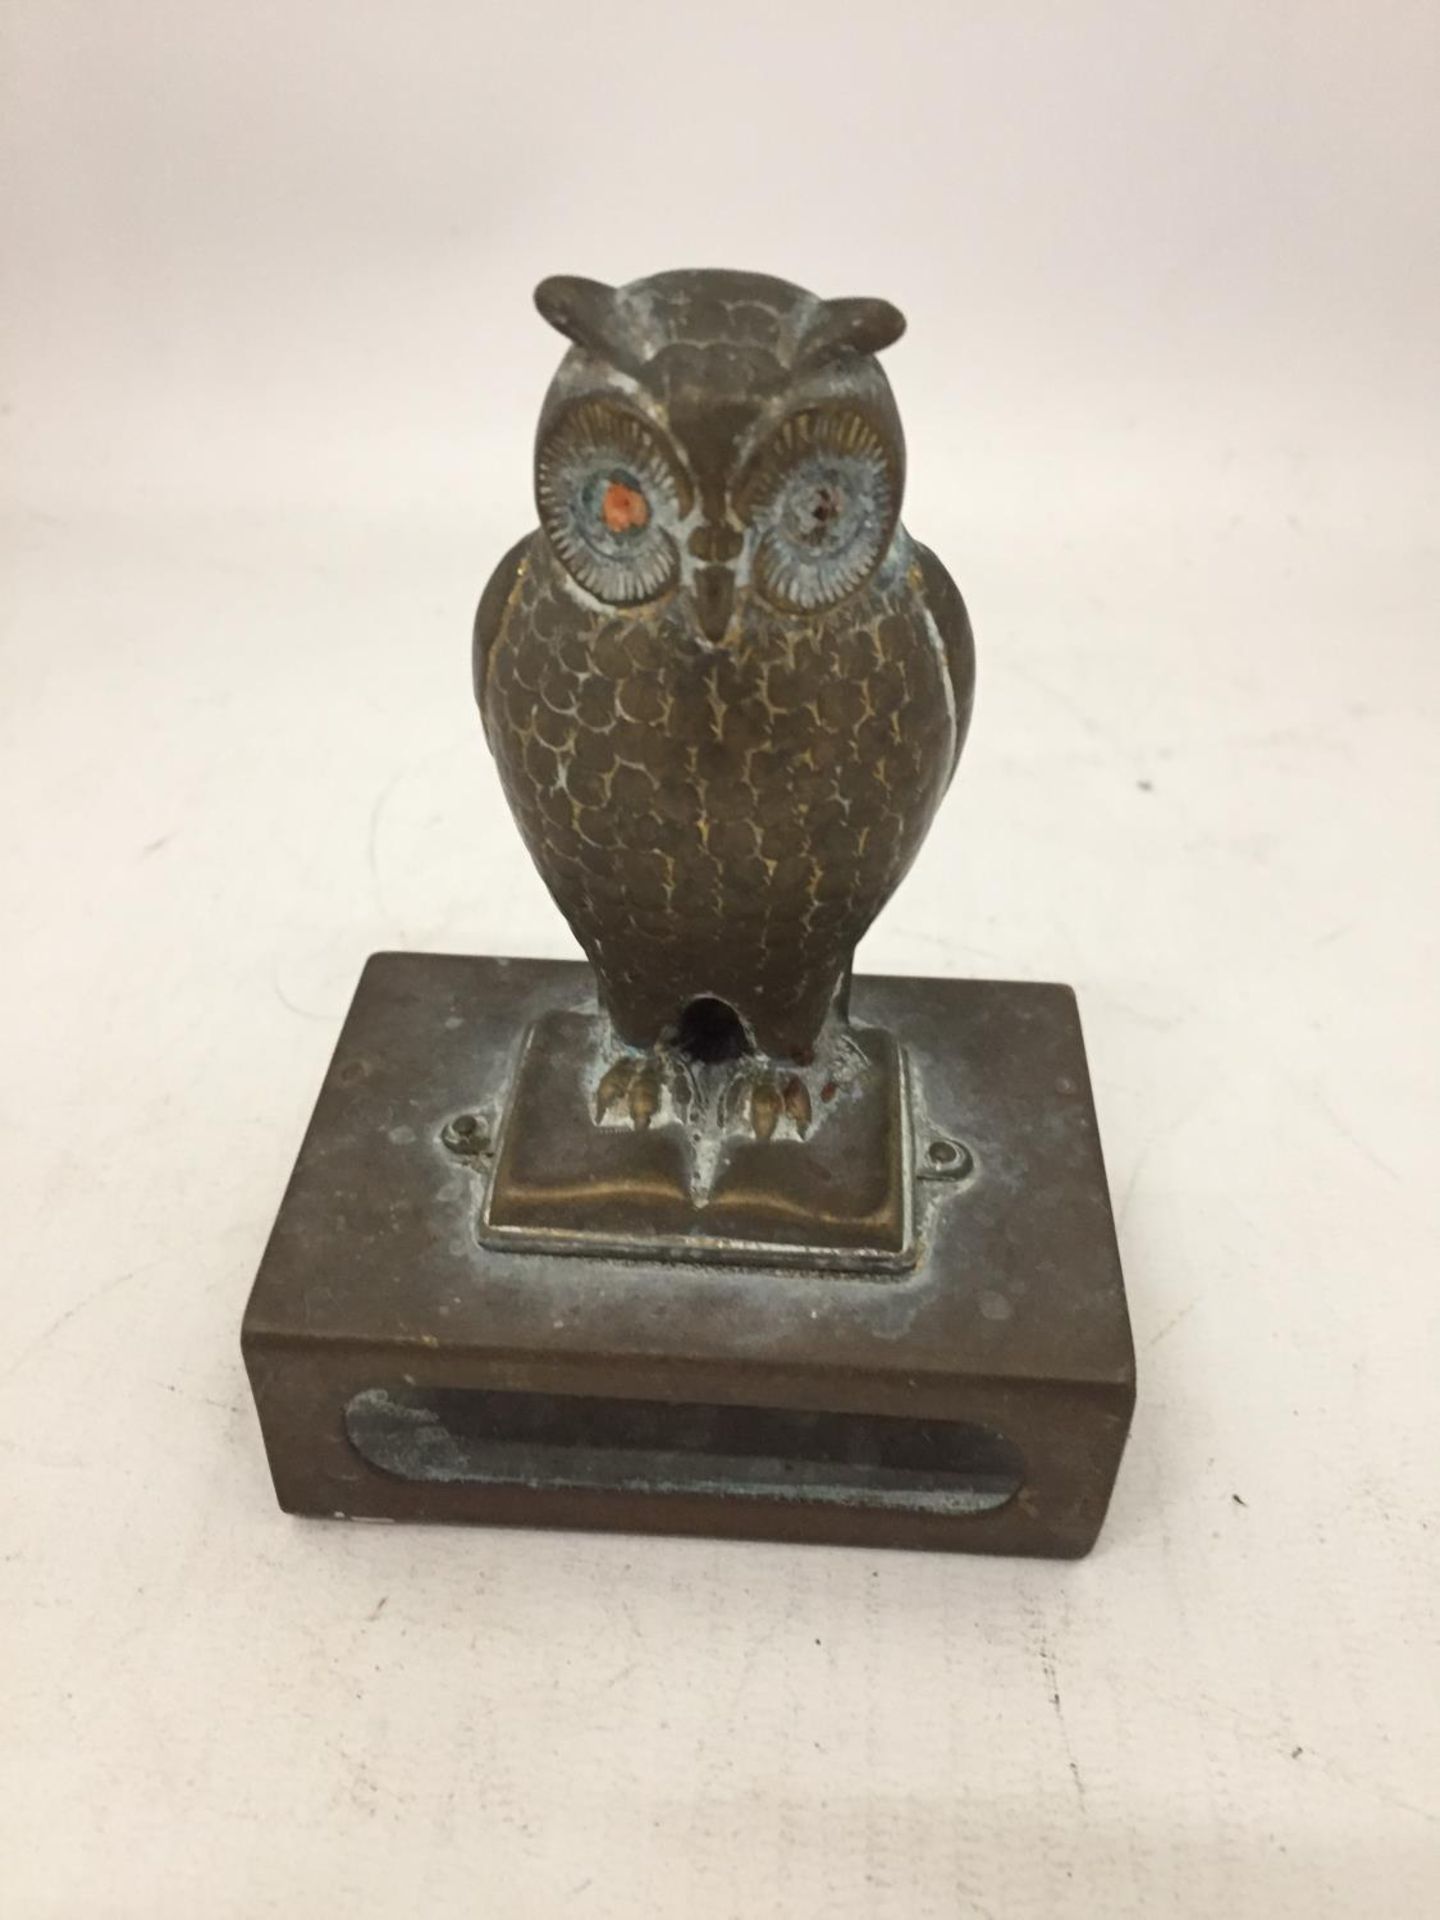 A VINTAGE BRASS MATCHBOX HOLDER WITH A BRASS OWL FIGURE ON TOP